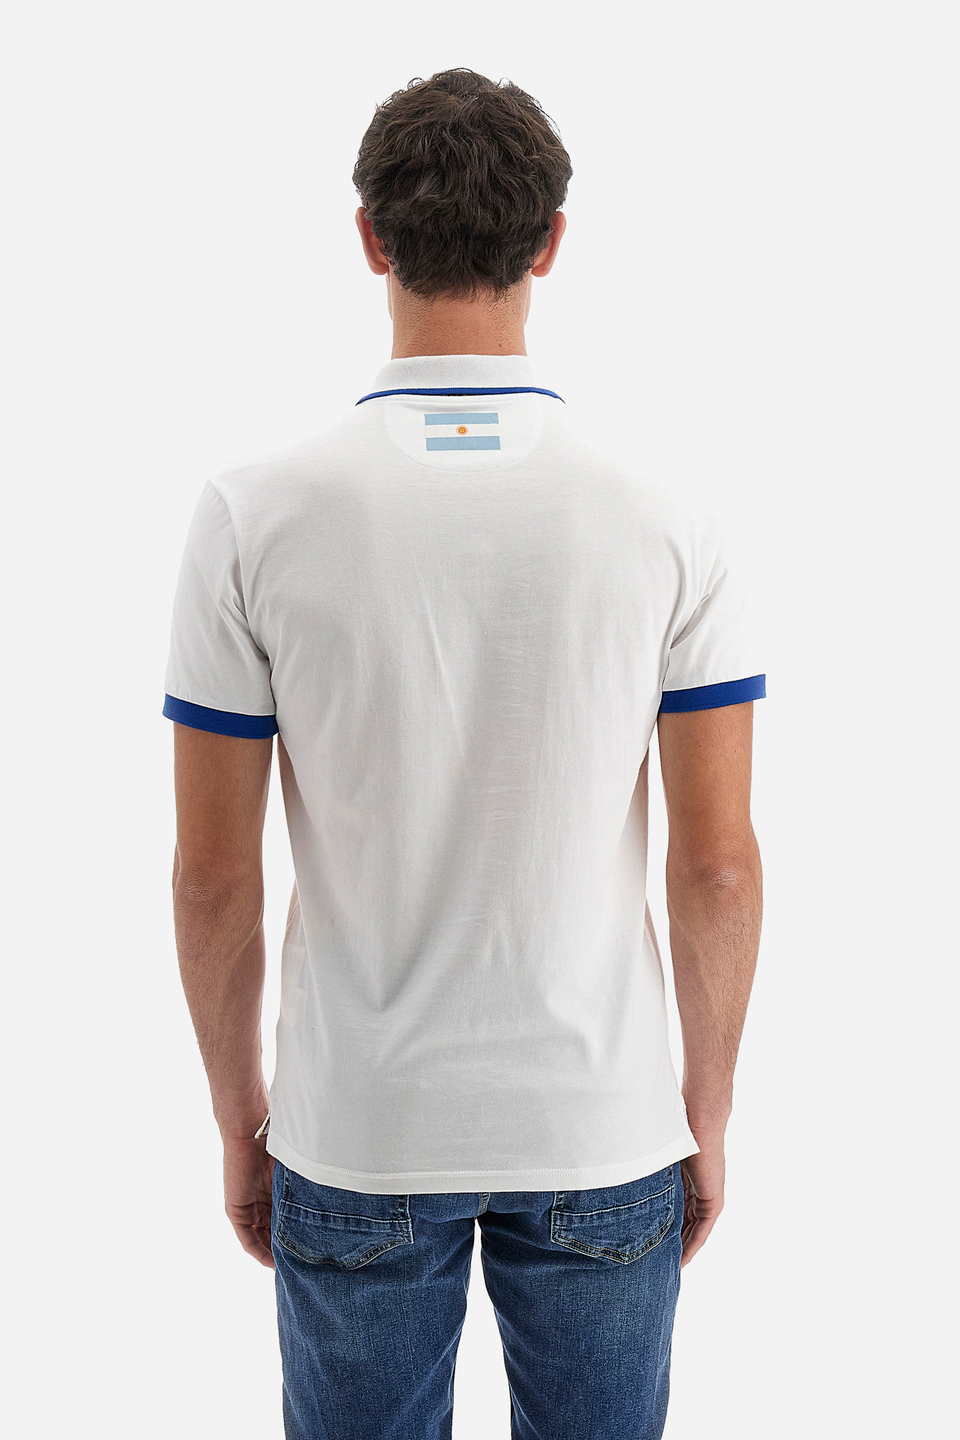 Regular fit 100% cotton short-sleeved polo shirt for men - Capsule Palermo | La Martina - Official Online Shop